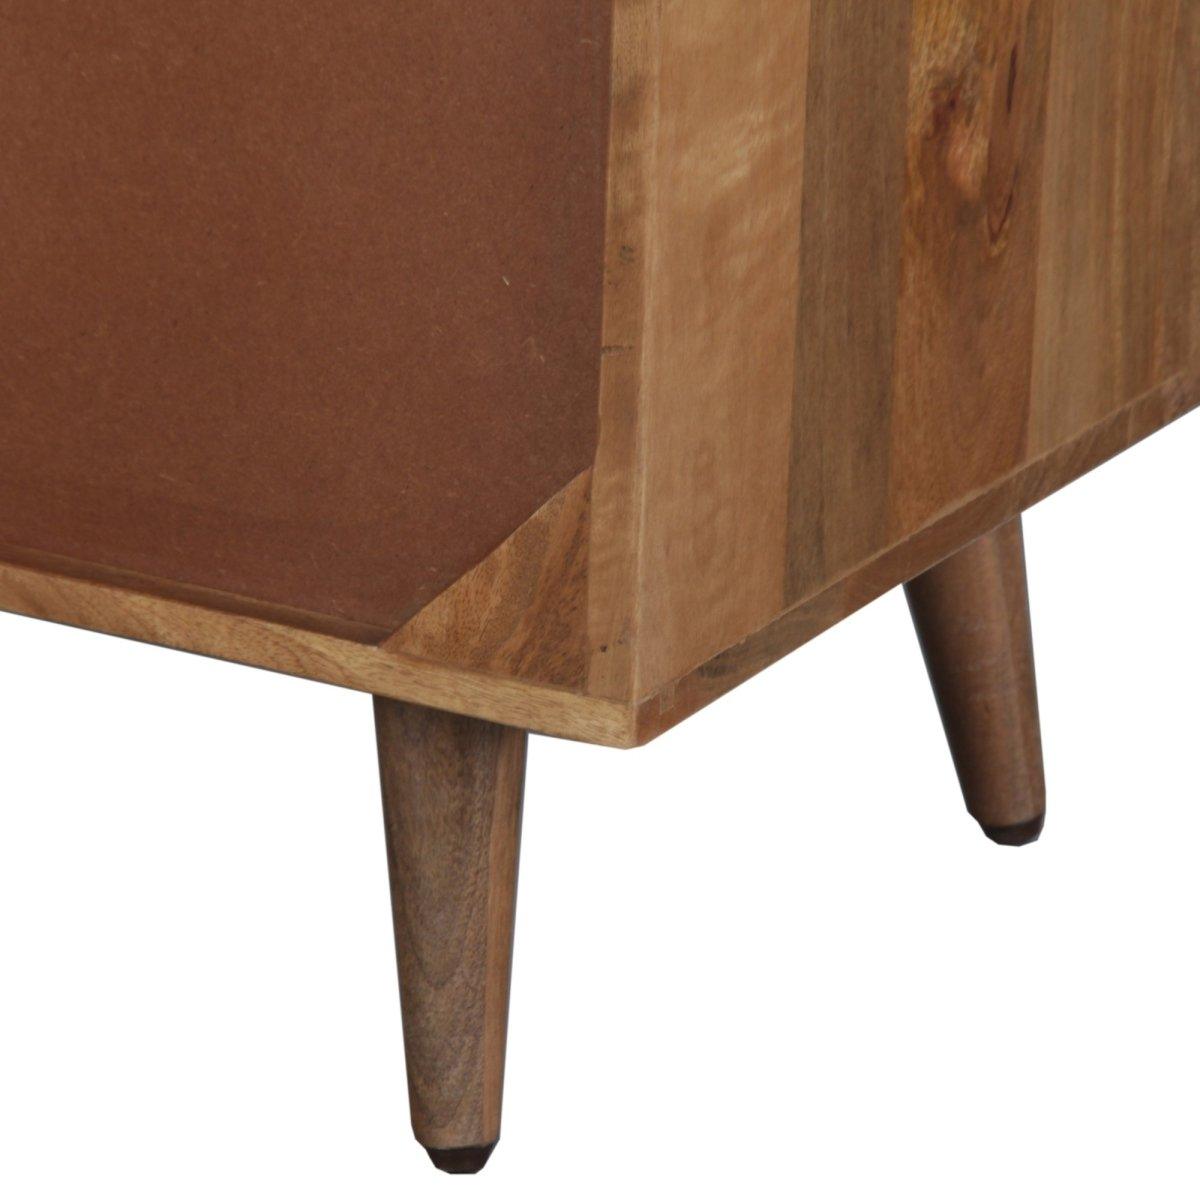 Mercury Mango Wood Buffet - Rustic Furniture Outlet